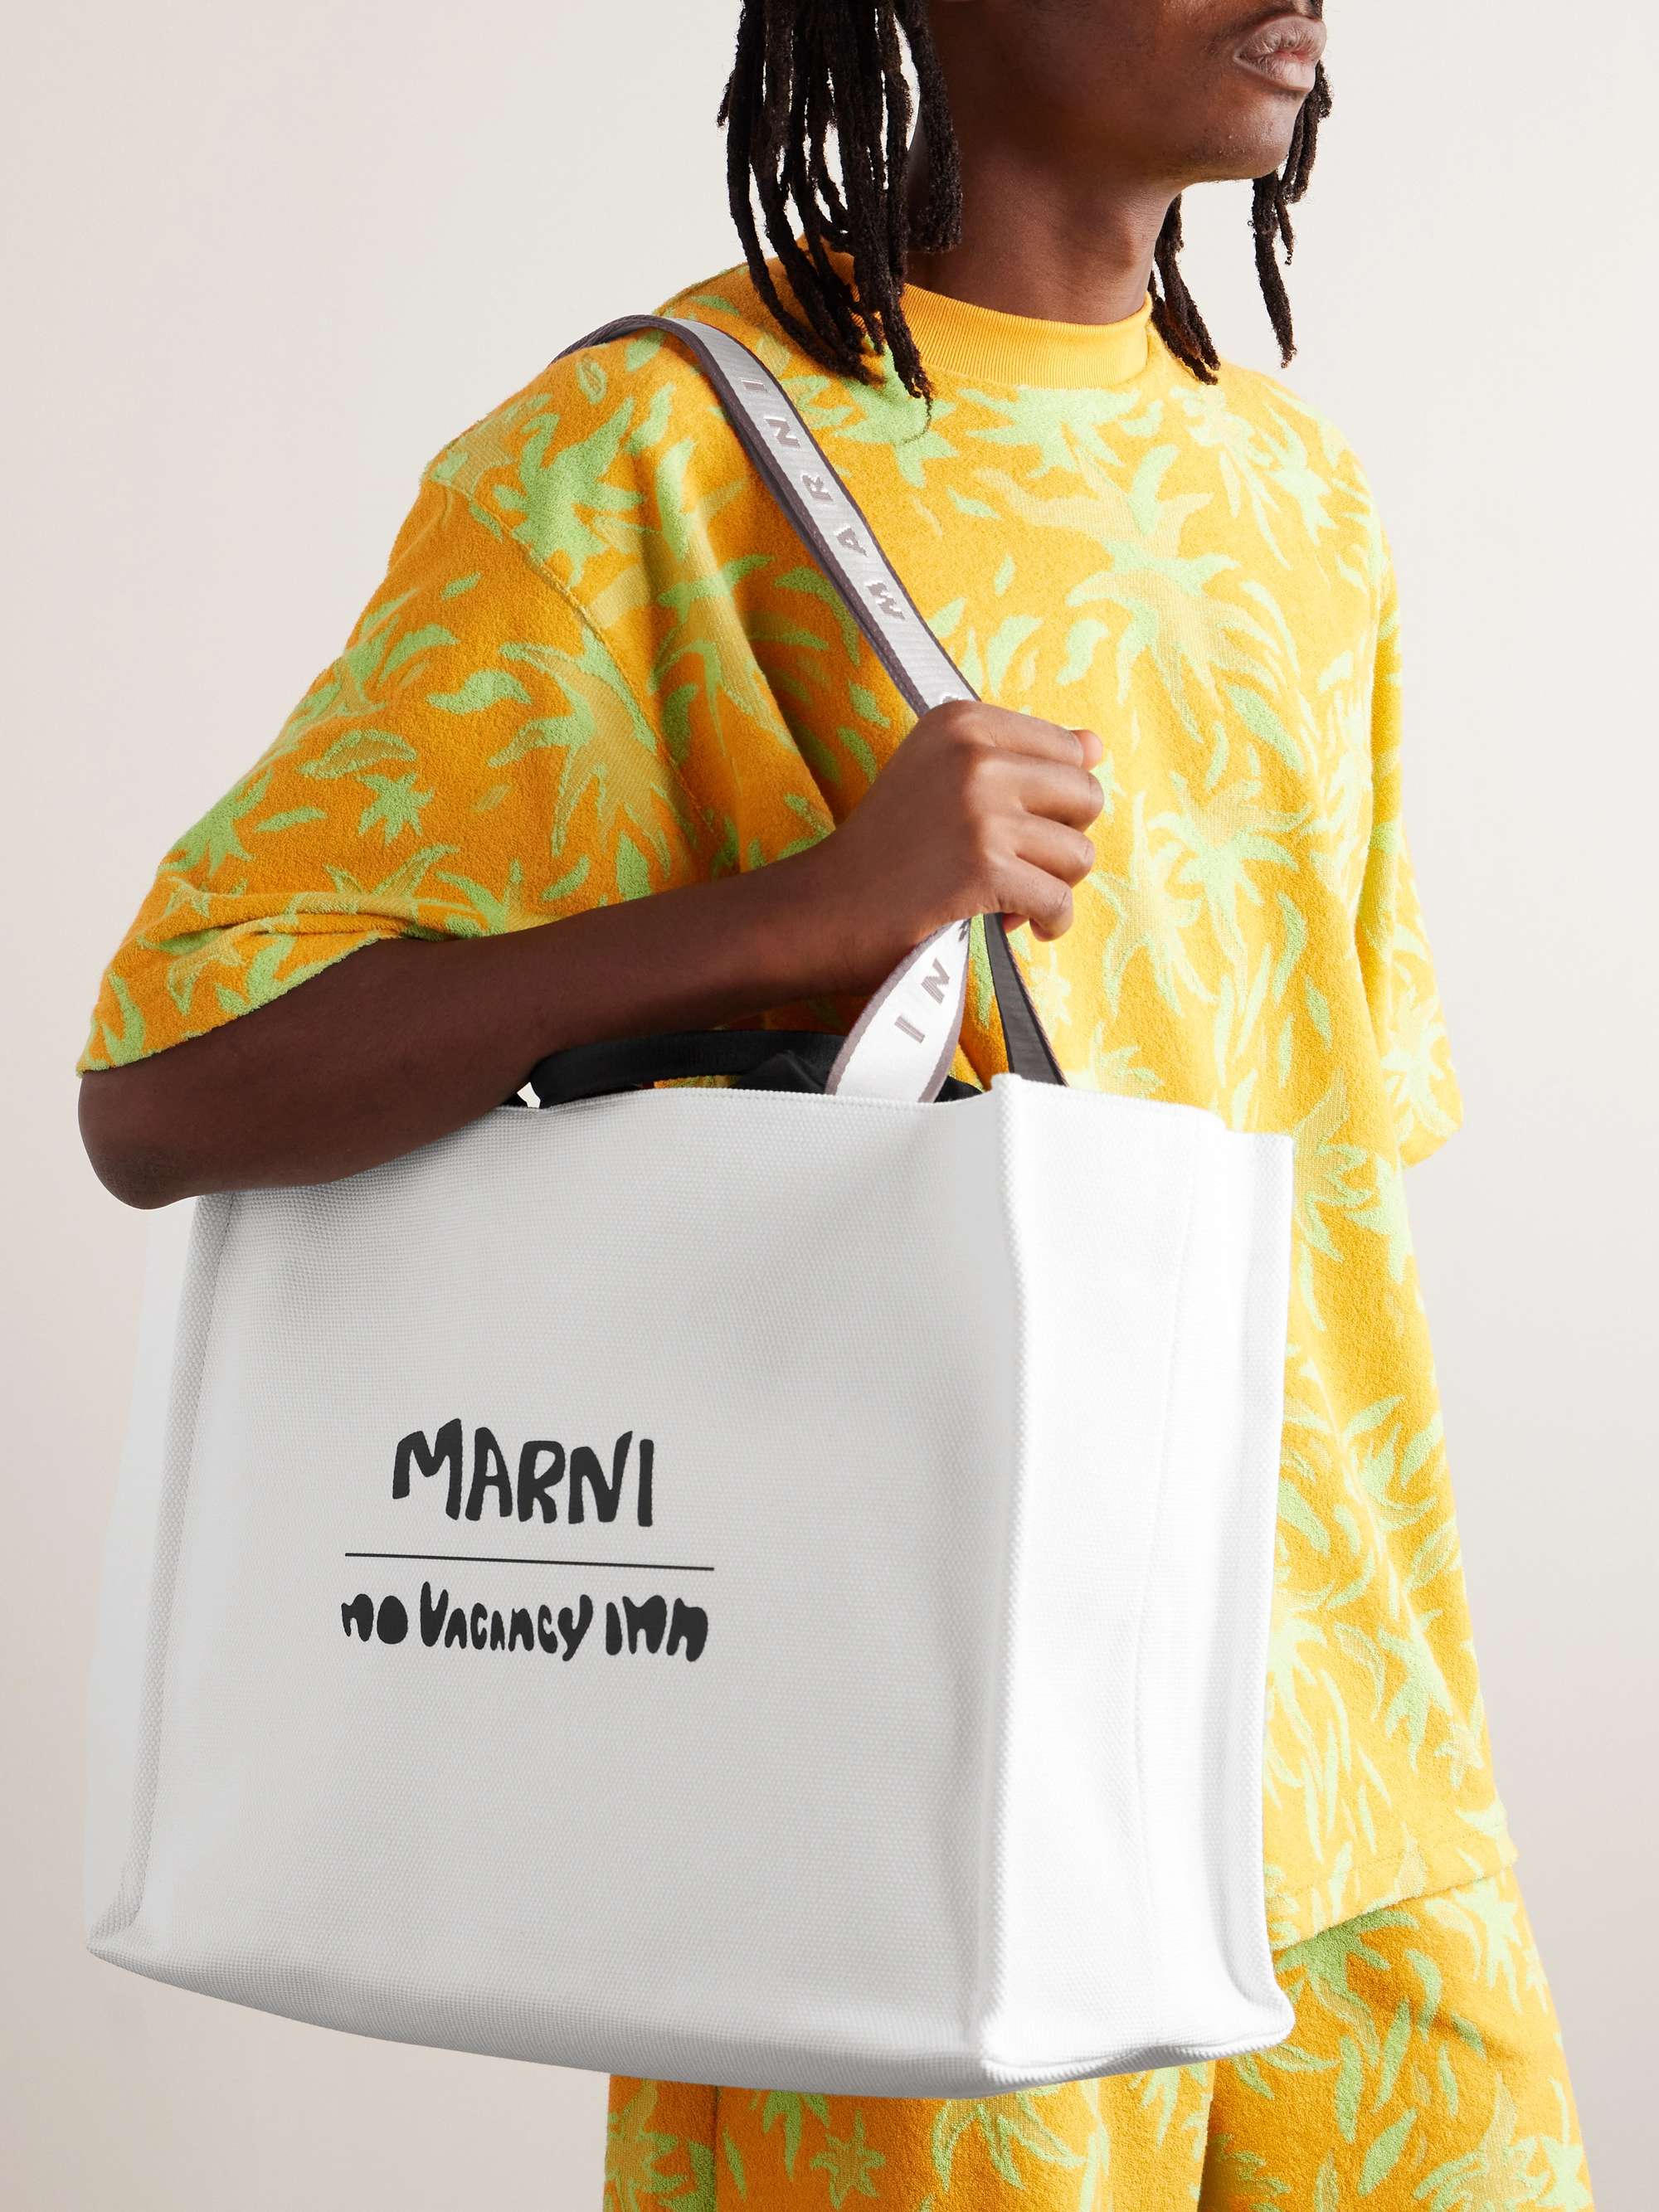 MARNI + No Vacancy Inn Printed Canvas Tote Bag for Men | MR PORTER